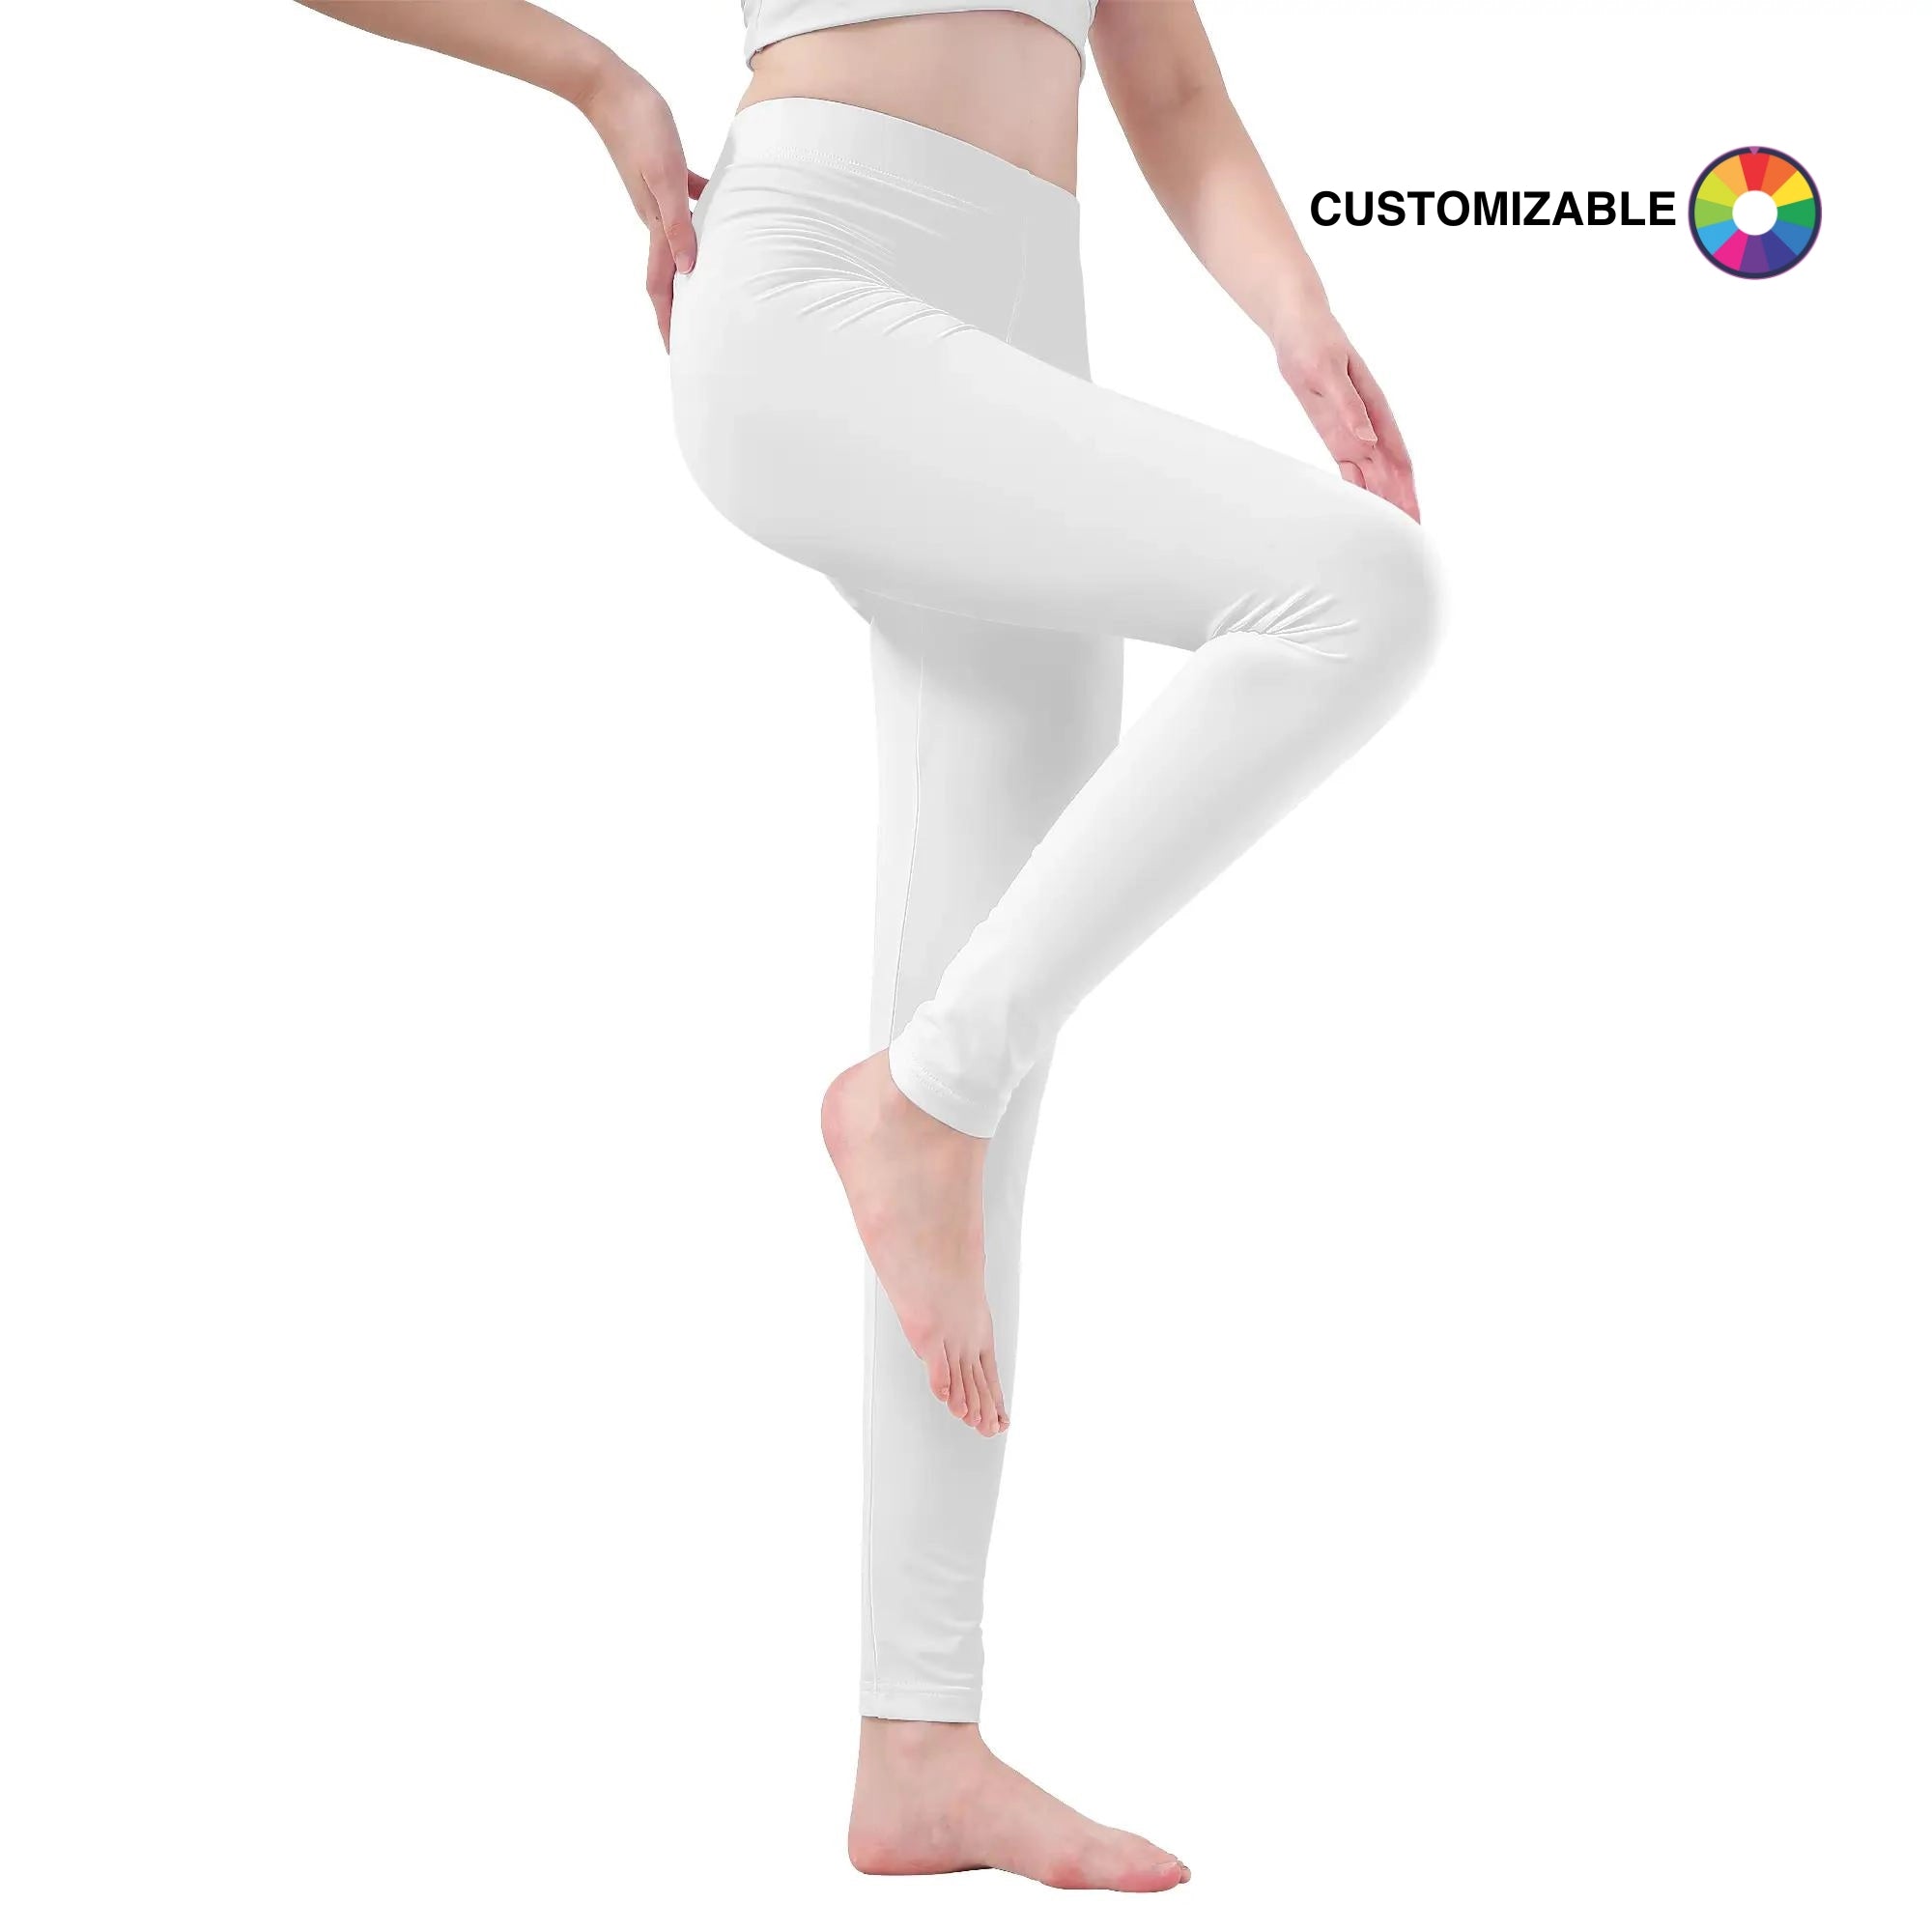 Customizable Yoga Leggings